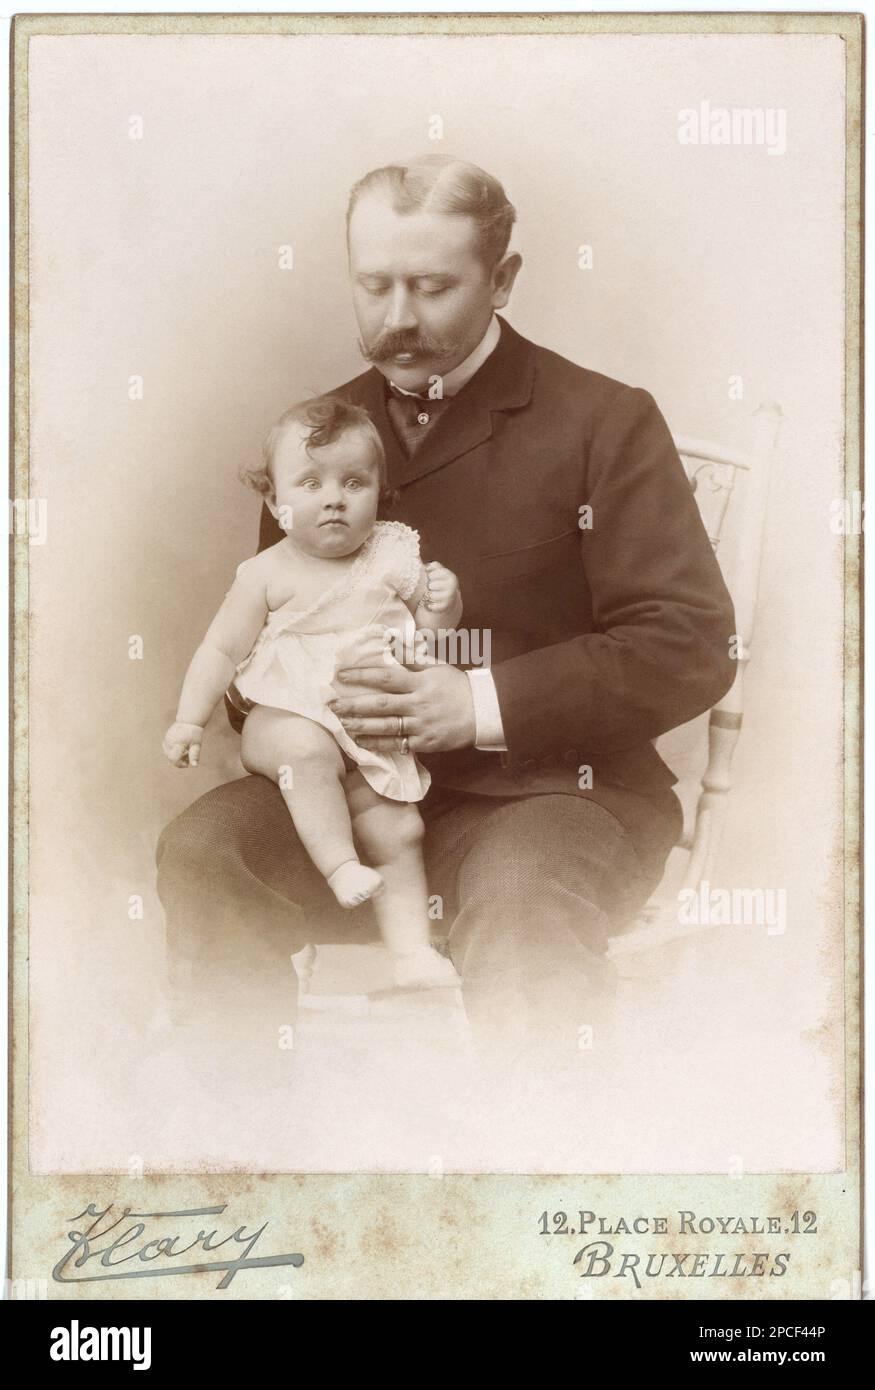 1885 ca , BRUXELLES , BELGIUM : A little boy with  his father. Photo by Klary , Bruxelles . Undentified subjects names . This photo came from the album of the family of french baron Ernest De La Grange ( 1854 - 1899 ) and his wife baronesse Clementine de Chaumont-Quitry ( 1863 - 1944 )  - PORTRAIT - RITRATTO -  PADRE E FIGLIO - PAPA'  - FOTO STORICHE - HISTORY PHOTOS -   - BAMBINO - BAMBINI - CHILD - bebe' - BABY - CHILDREN - BOTTOCENTO - 800's - '800 - FASHION - MODA - tie - cravatta - baffi - moustache  - FAMIGLIA - FAMILY - INFANZIA - CHILHOOD - FIGLIO - SON  - nobili -  Nobiltà  - nobility Stock Photo